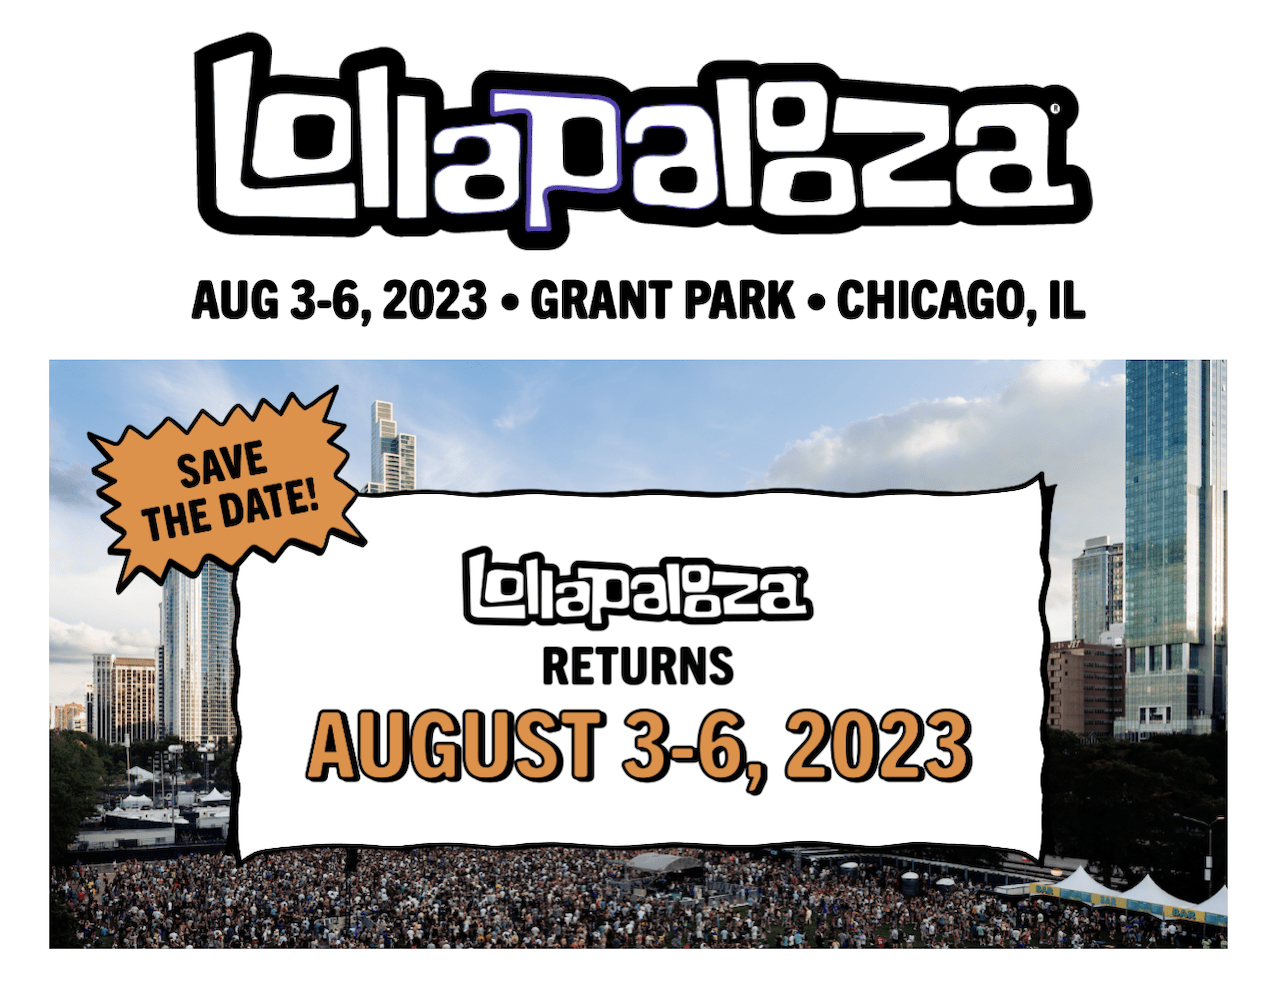 Lollapalooza 2023 Dates Announced